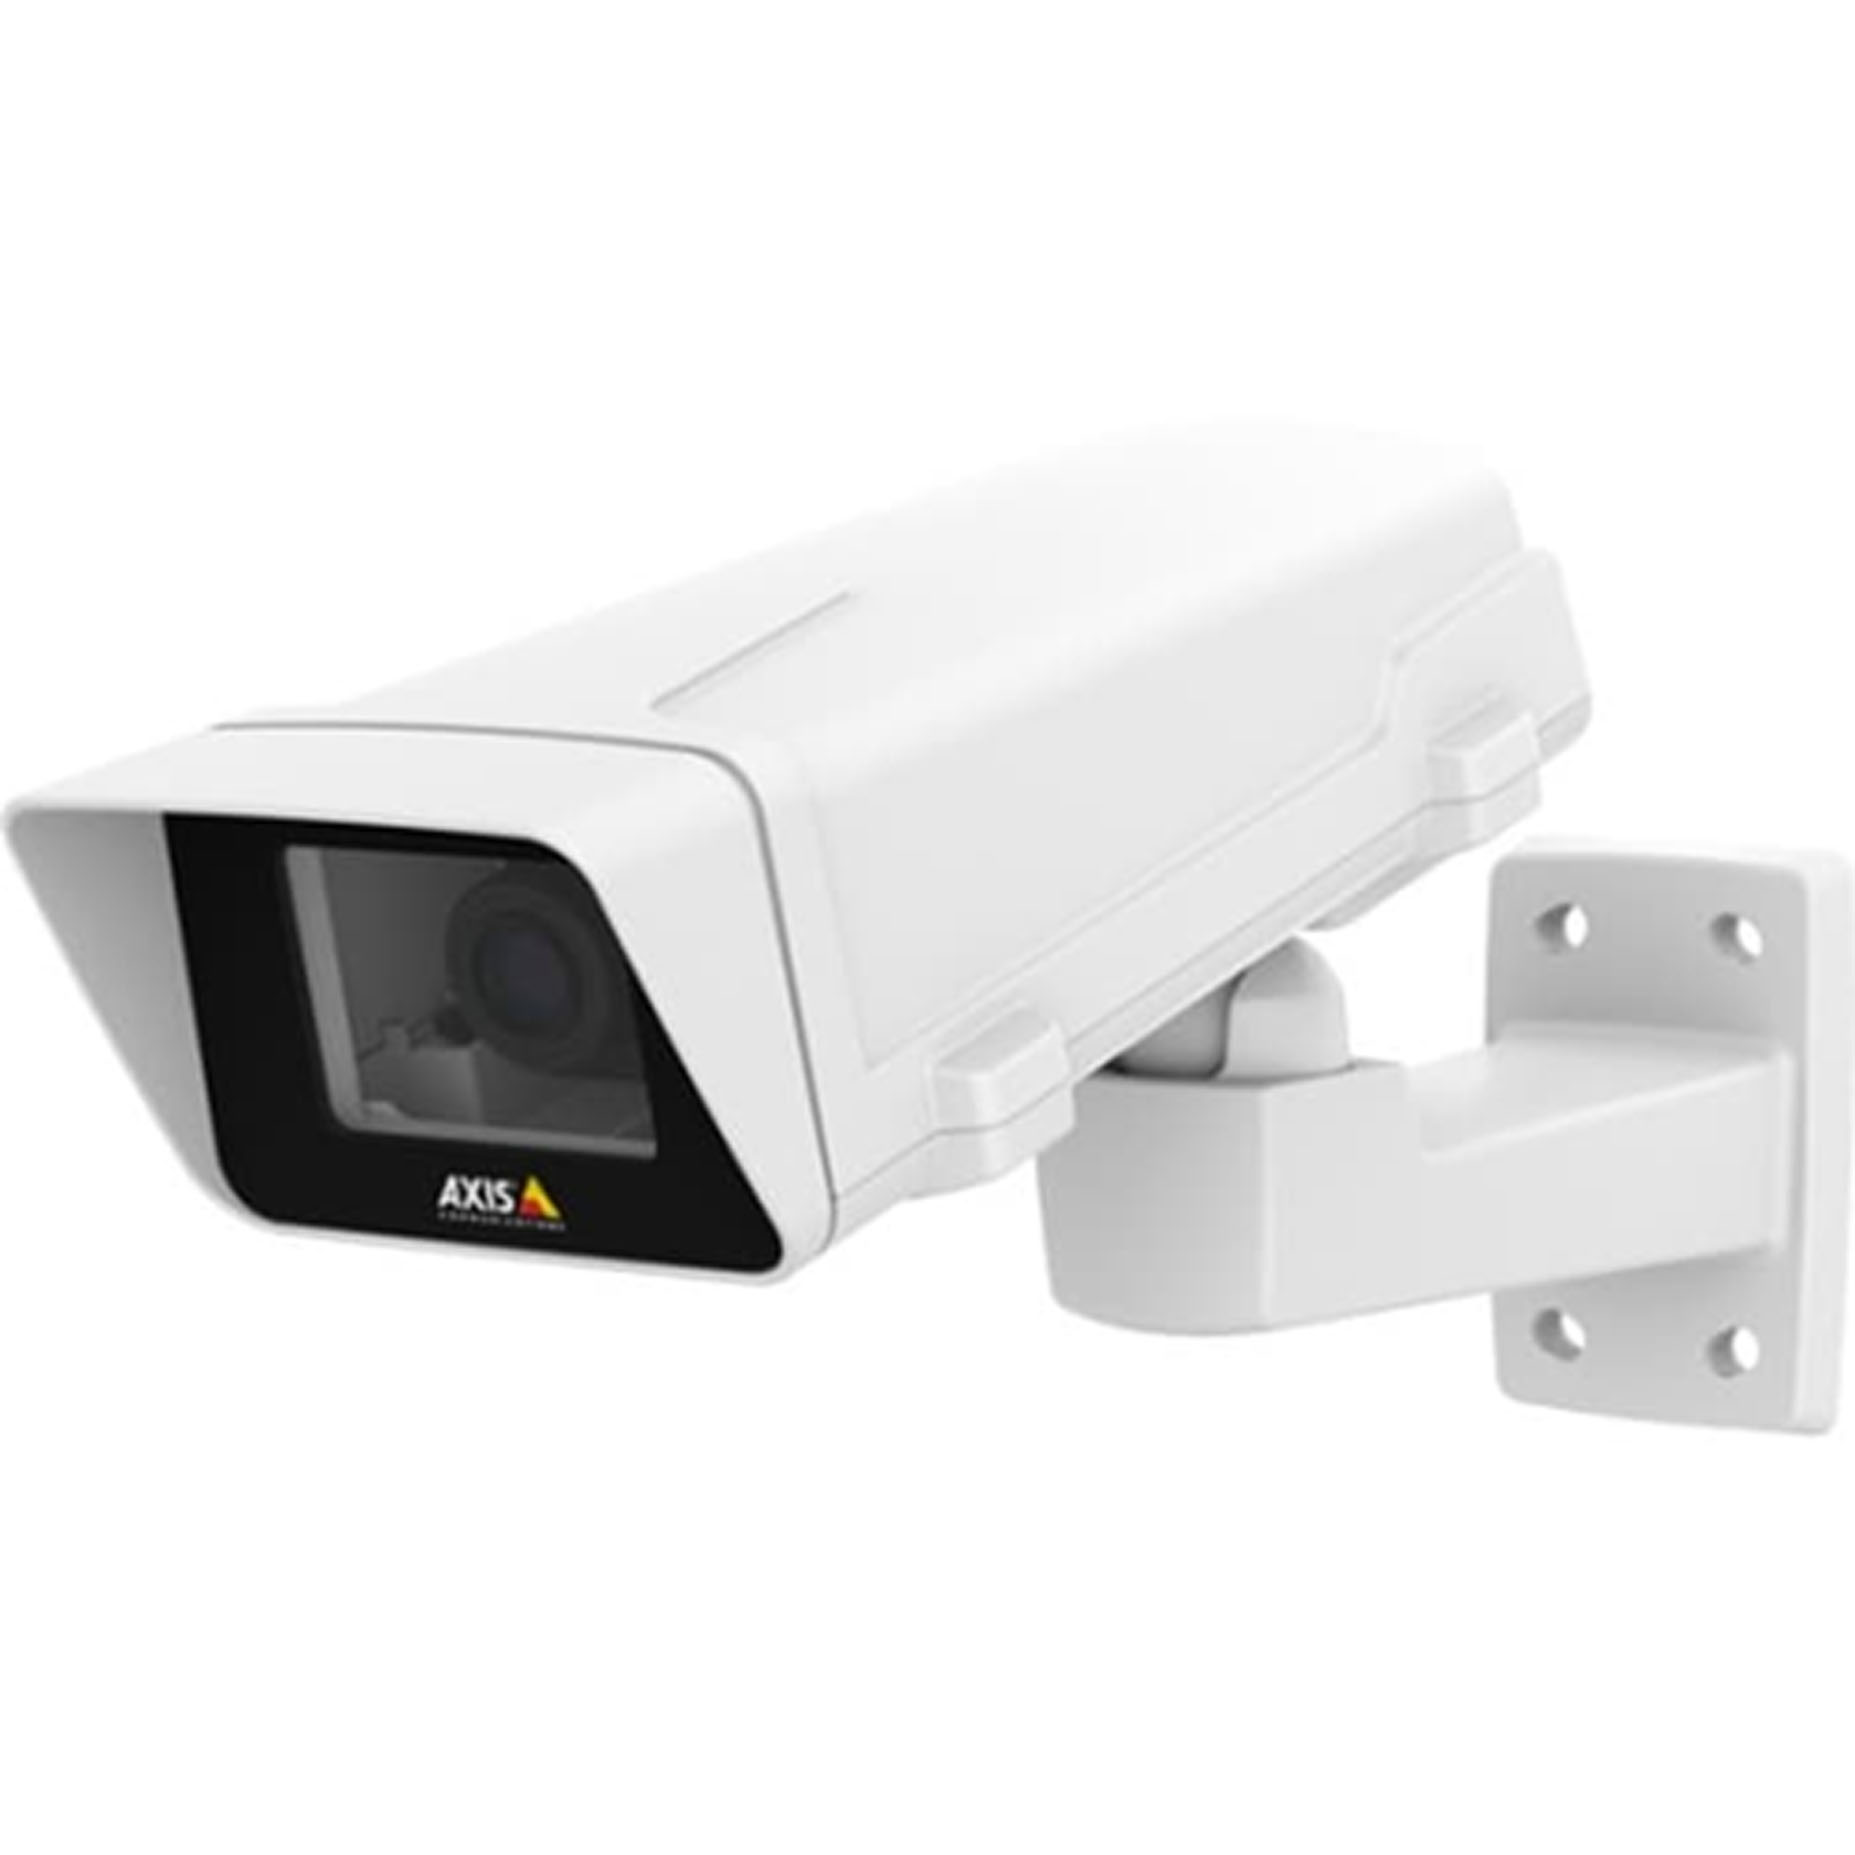 Harga Jual AXIS M1125-E Network Camera Outdoor-ready and affordable HDTV 1080p camera